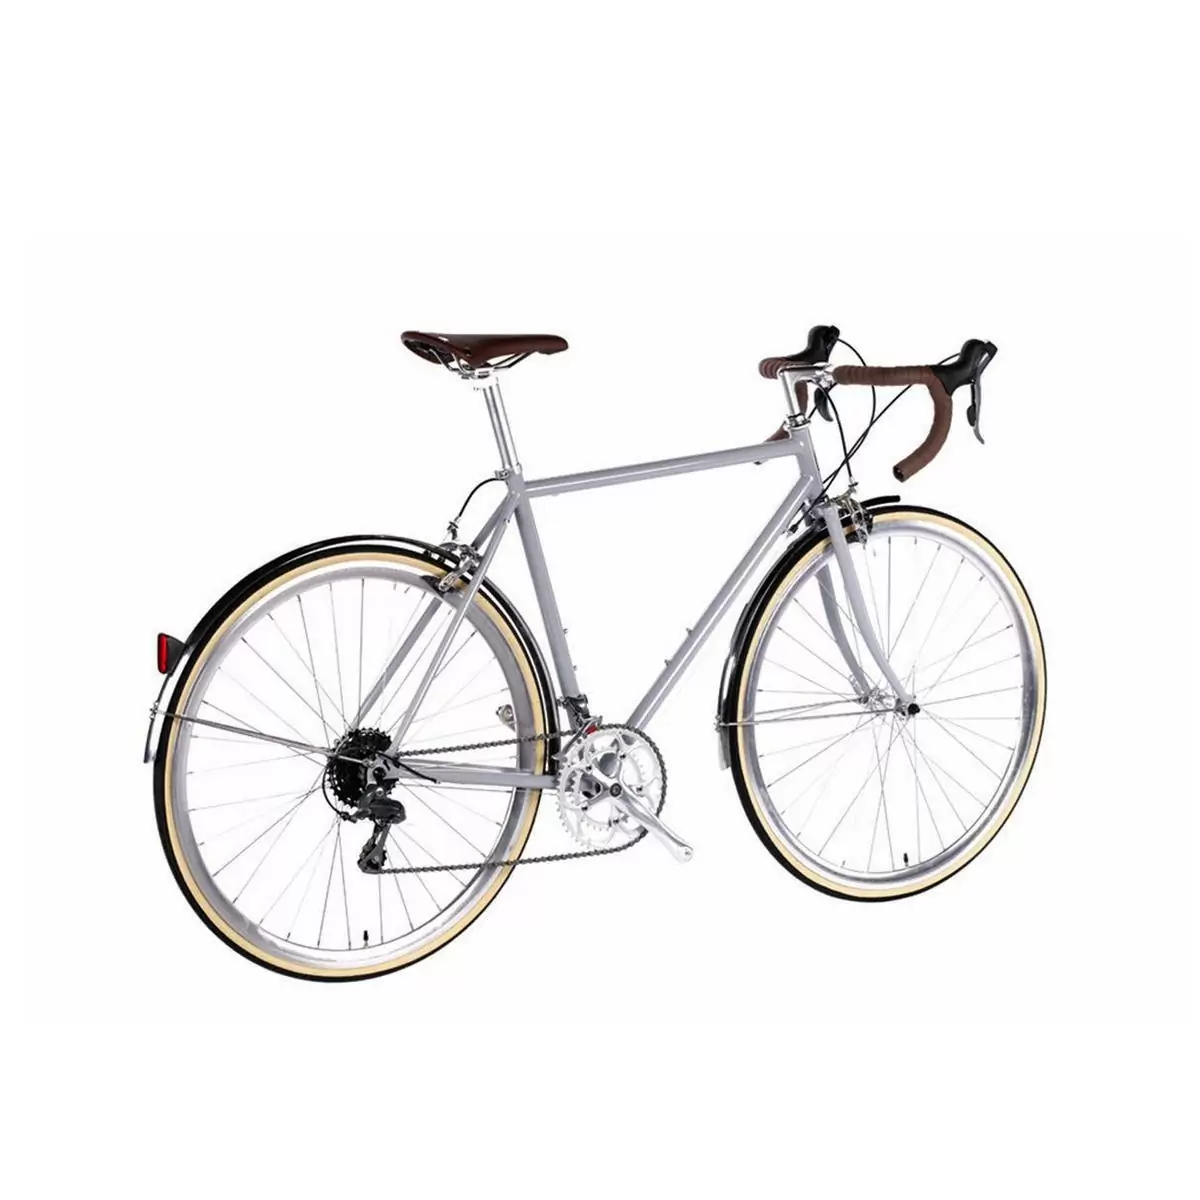 Bicicleta urbana TROY 16spd Highland prata média 54cm #2